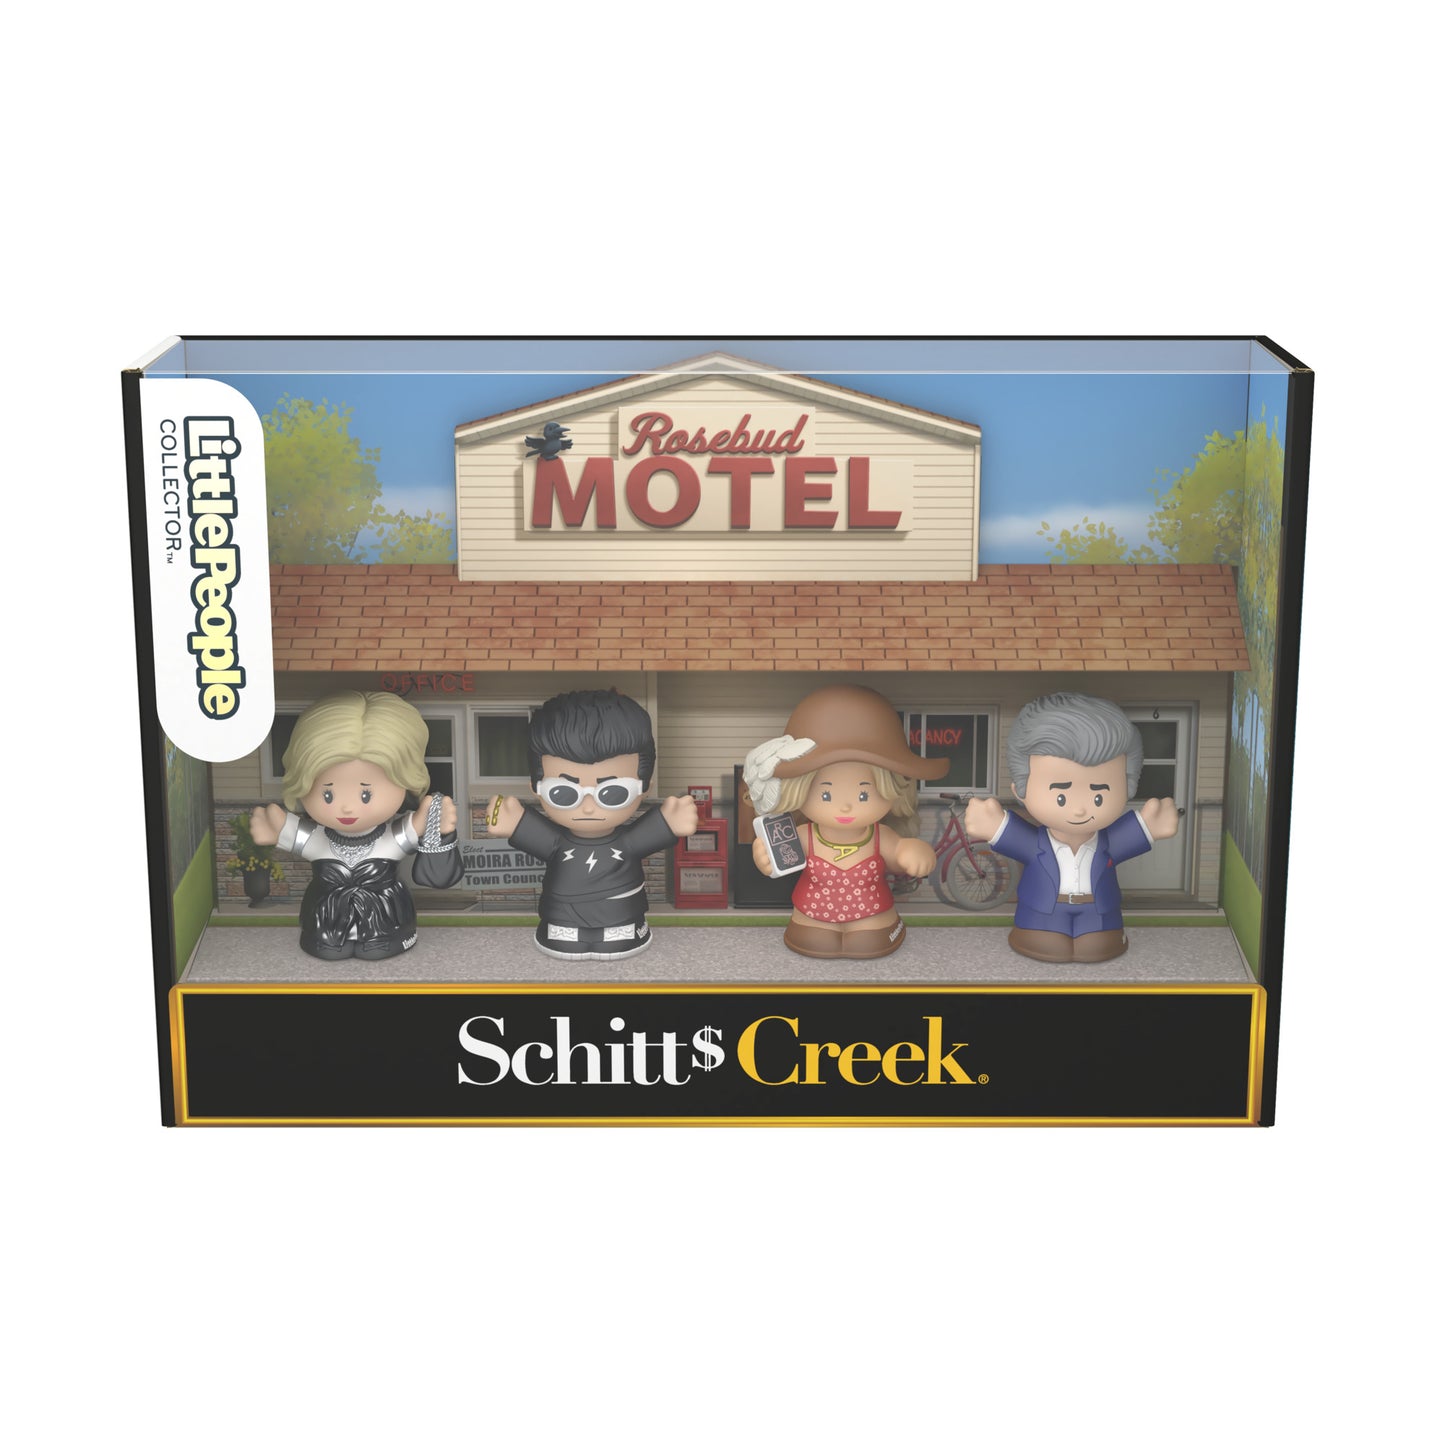 Little People Collector Schitt's Creek Special Edition Set